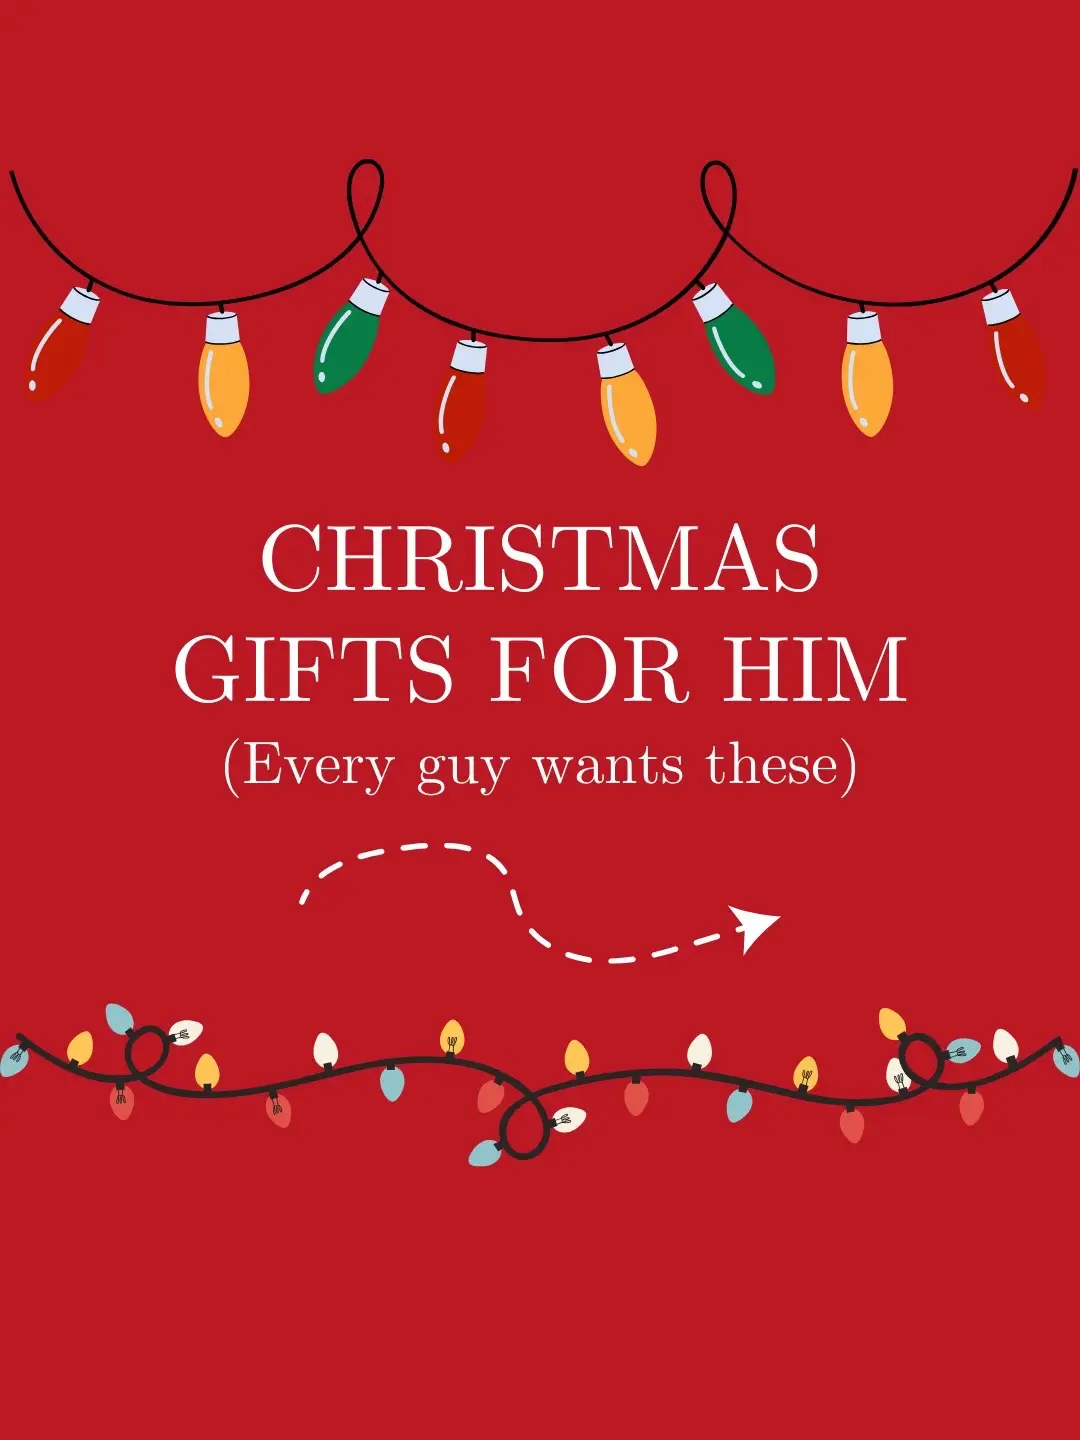 Tag him! #giftsforhim #christmasgift #mensgifts #giftideas #holidaygift 